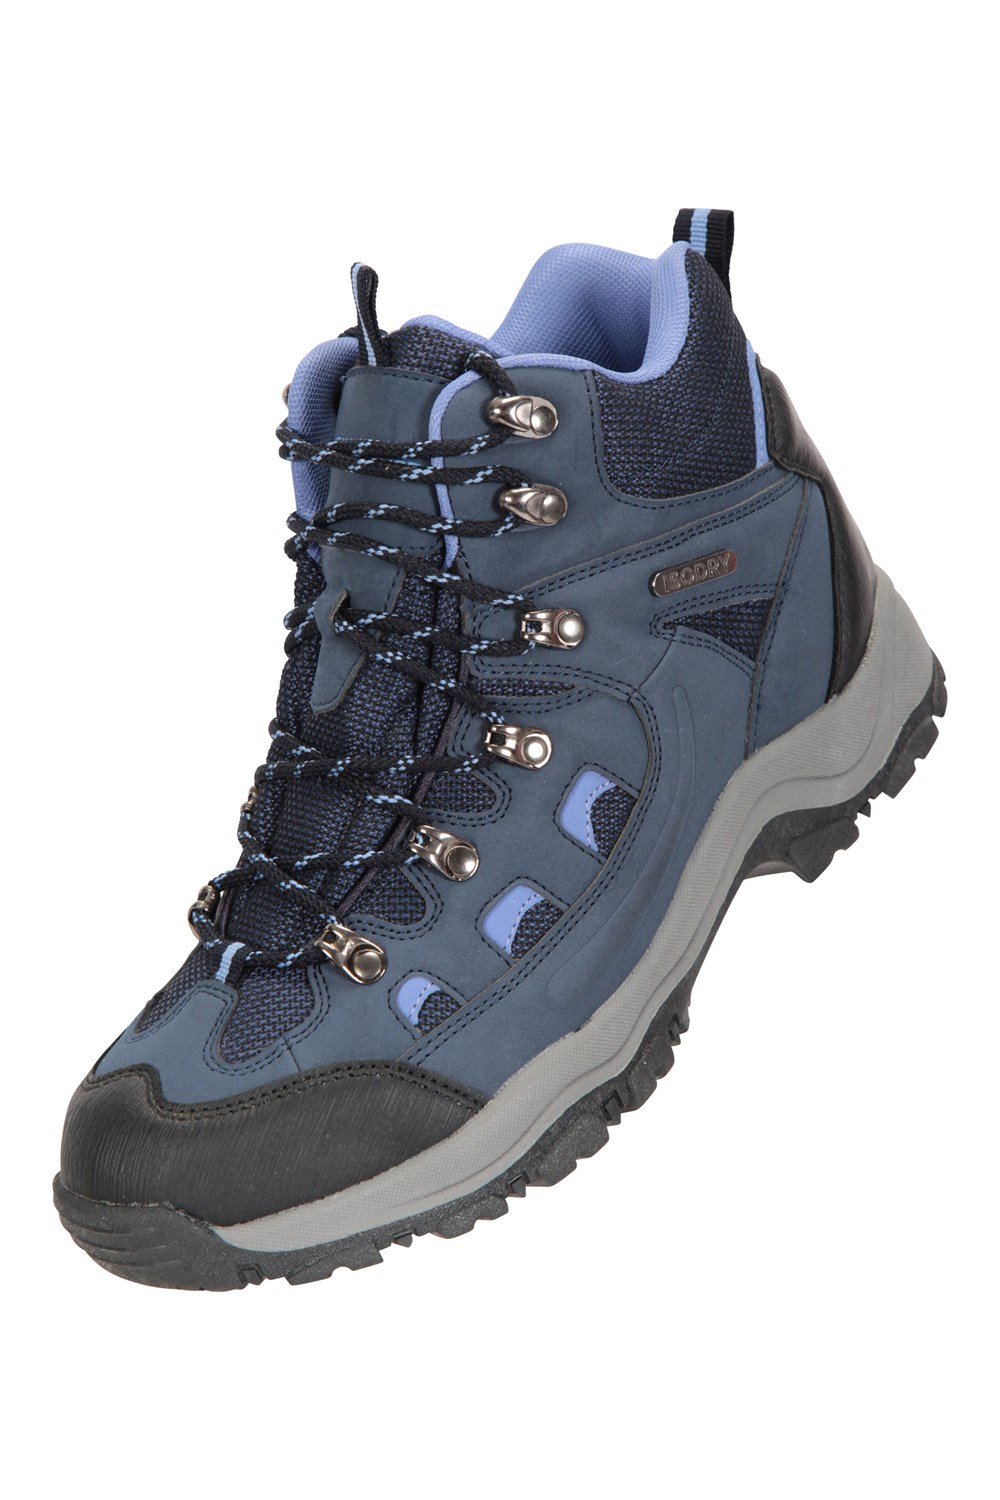 Mountain Warehouse Adventurer Womens Waterproof Boots - Hiking Trekking ...